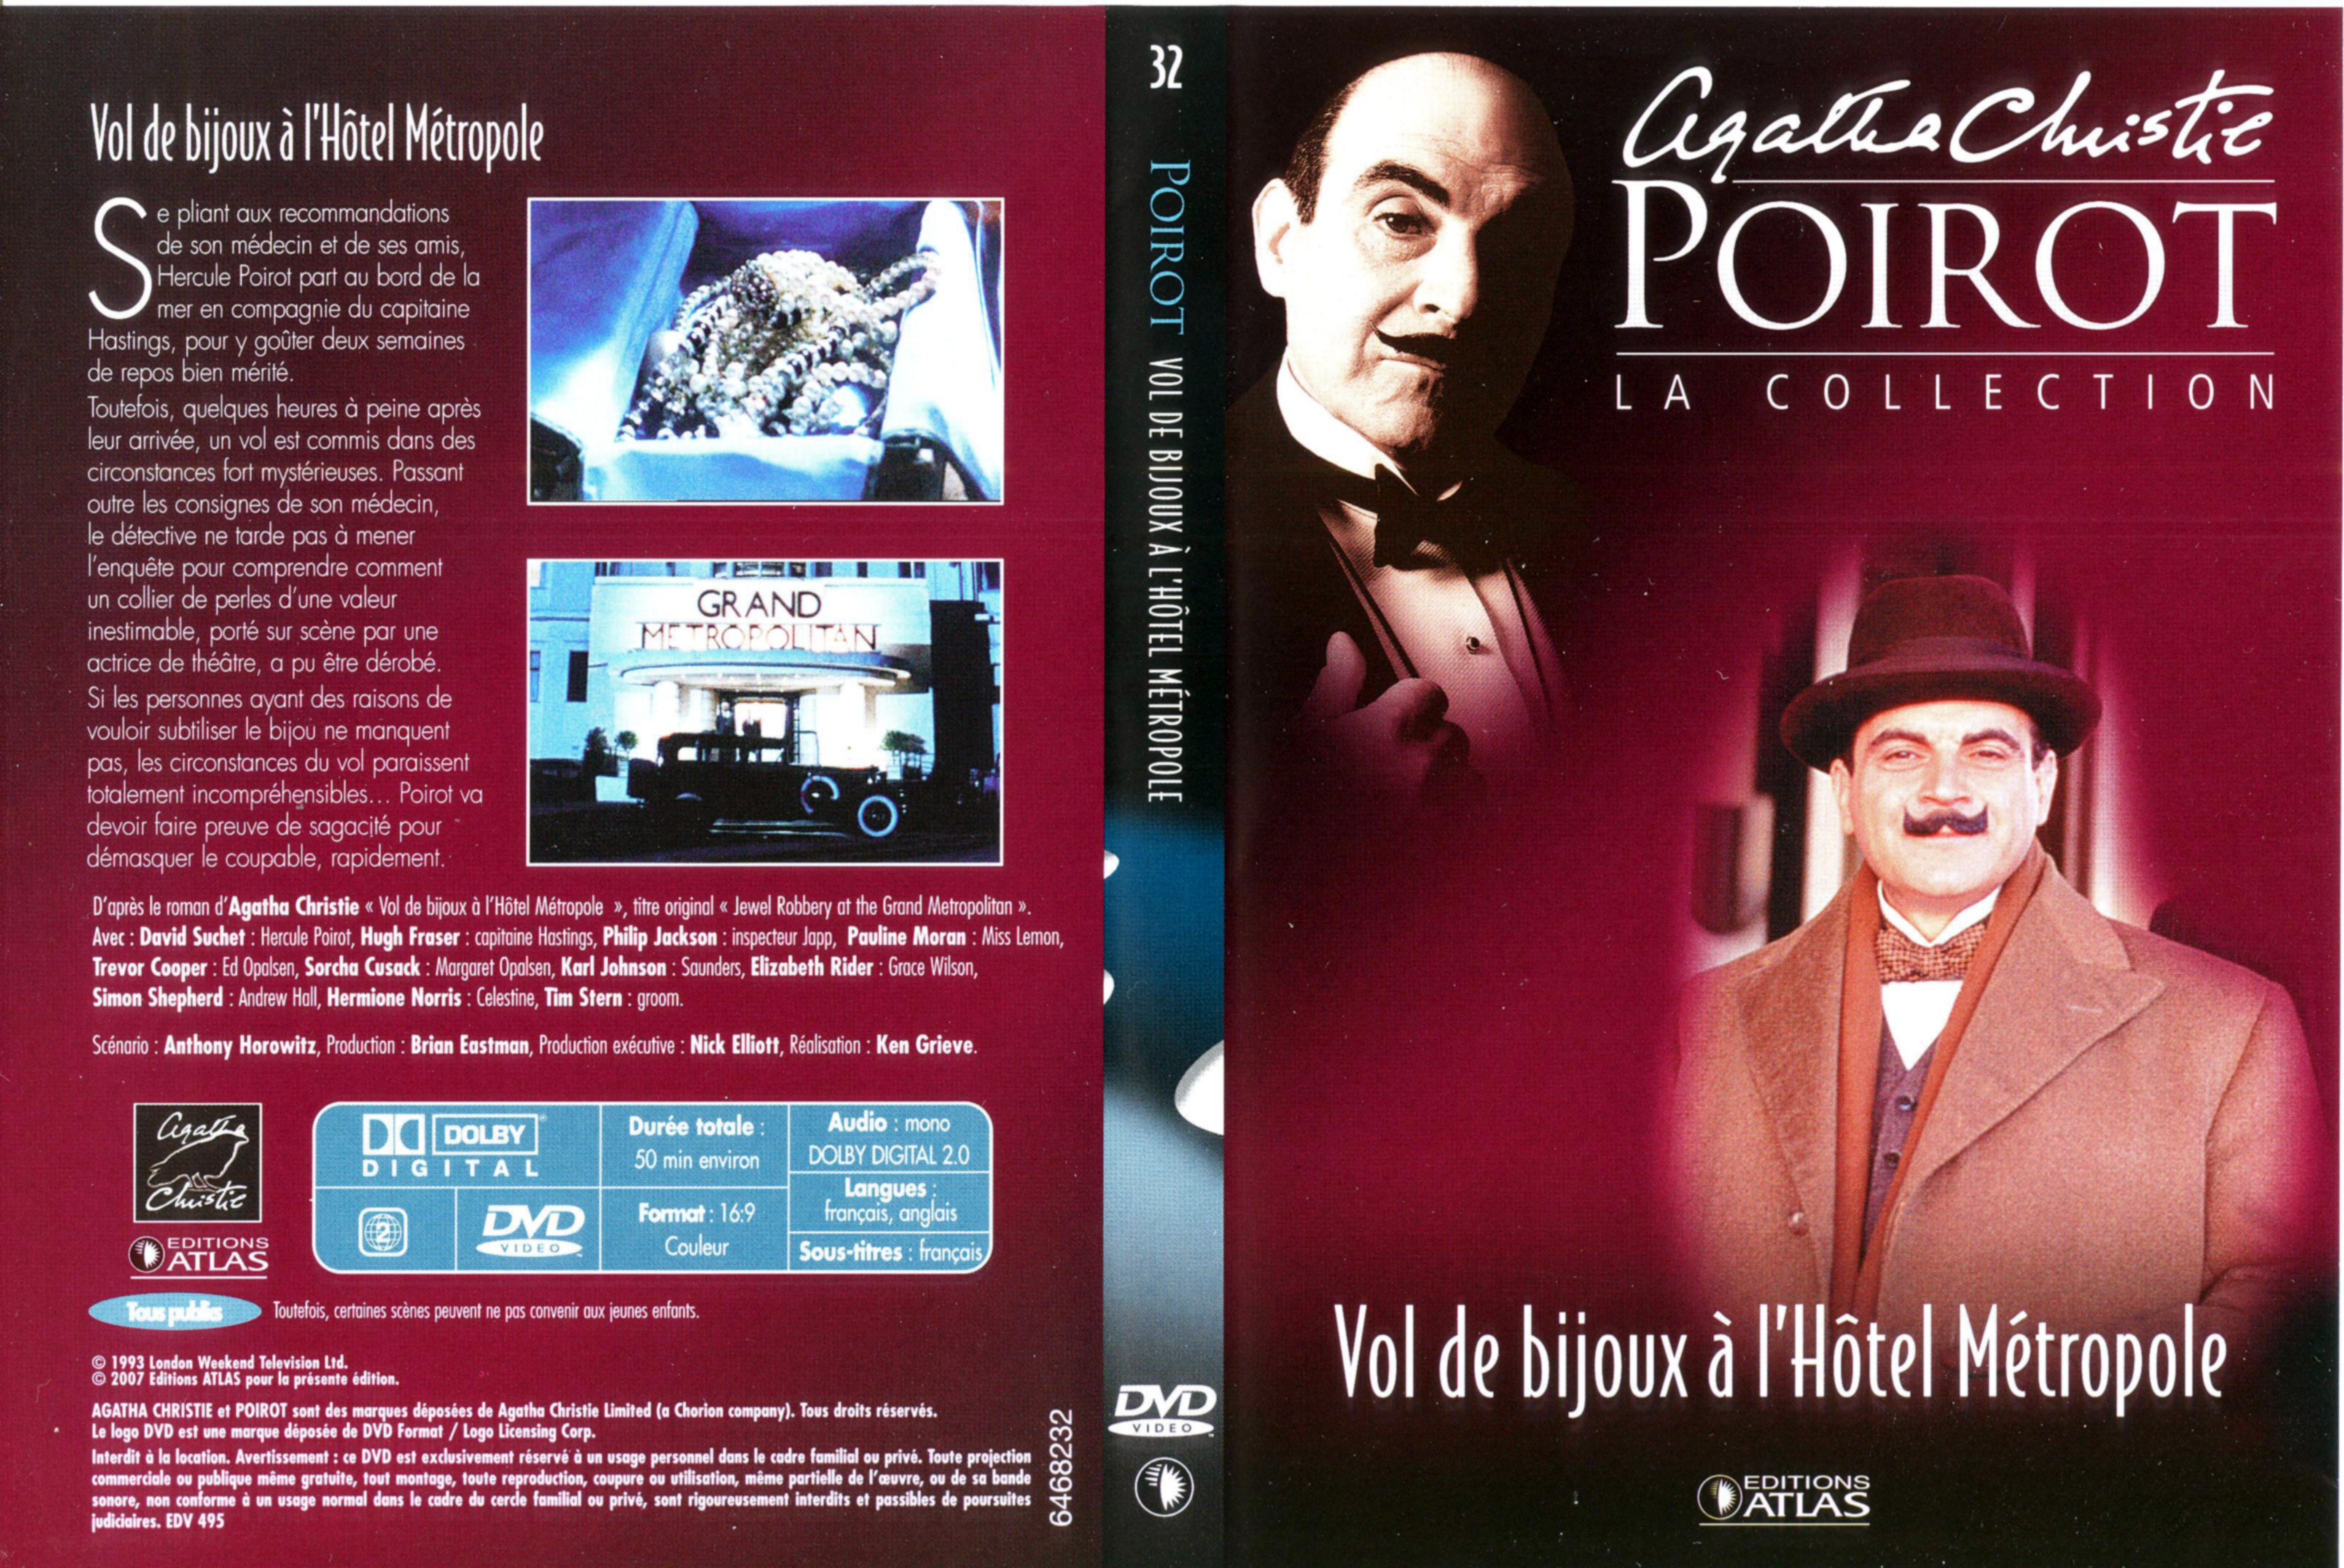 Jaquette DVD Hercule Poirot vol 32